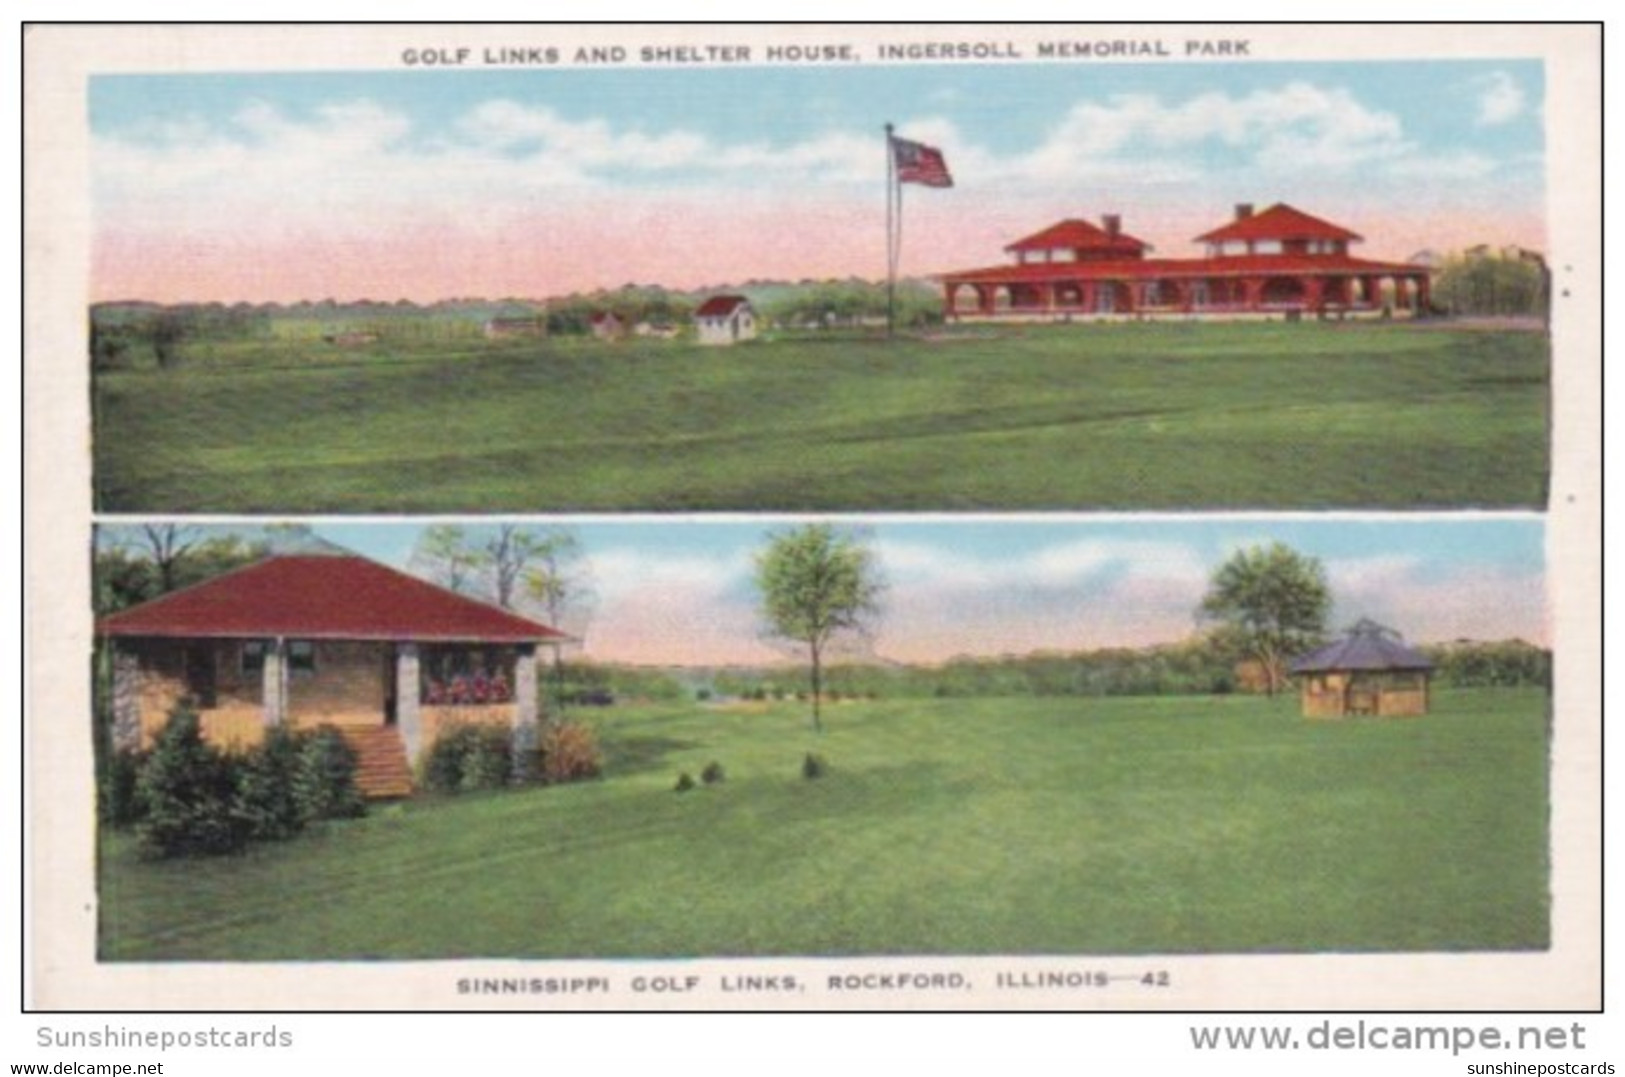 Illinois Rockford Golf Links &amp; Shelter House Ingersoll Memorial Park Sinnissippi Golf Links - Rockford